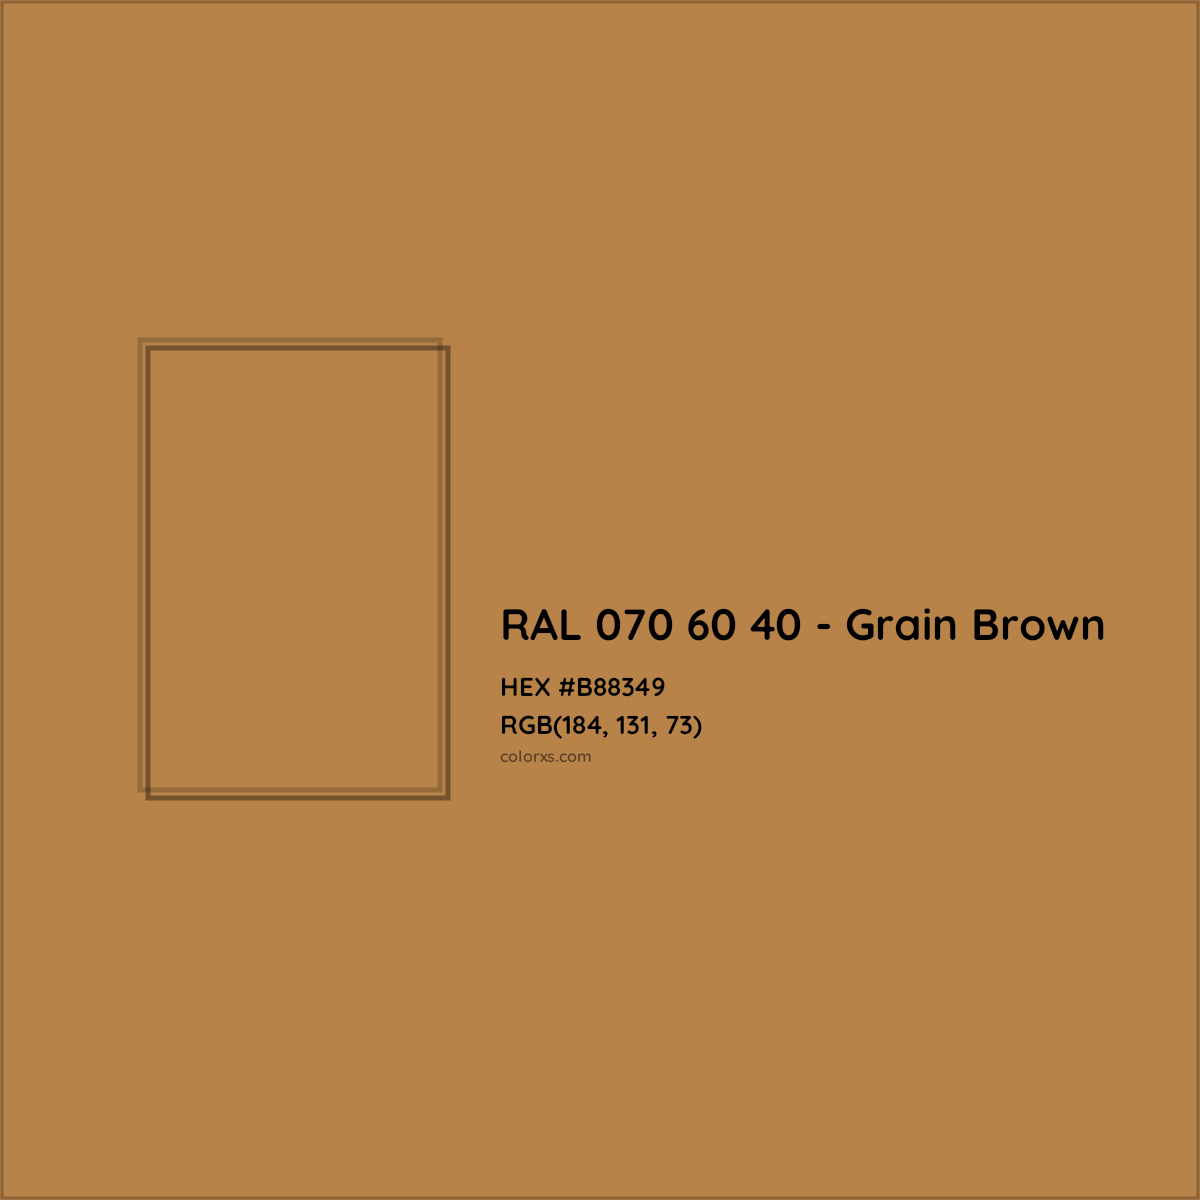 HEX #B88349 RAL 070 60 40 - Grain Brown CMS RAL Design - Color Code